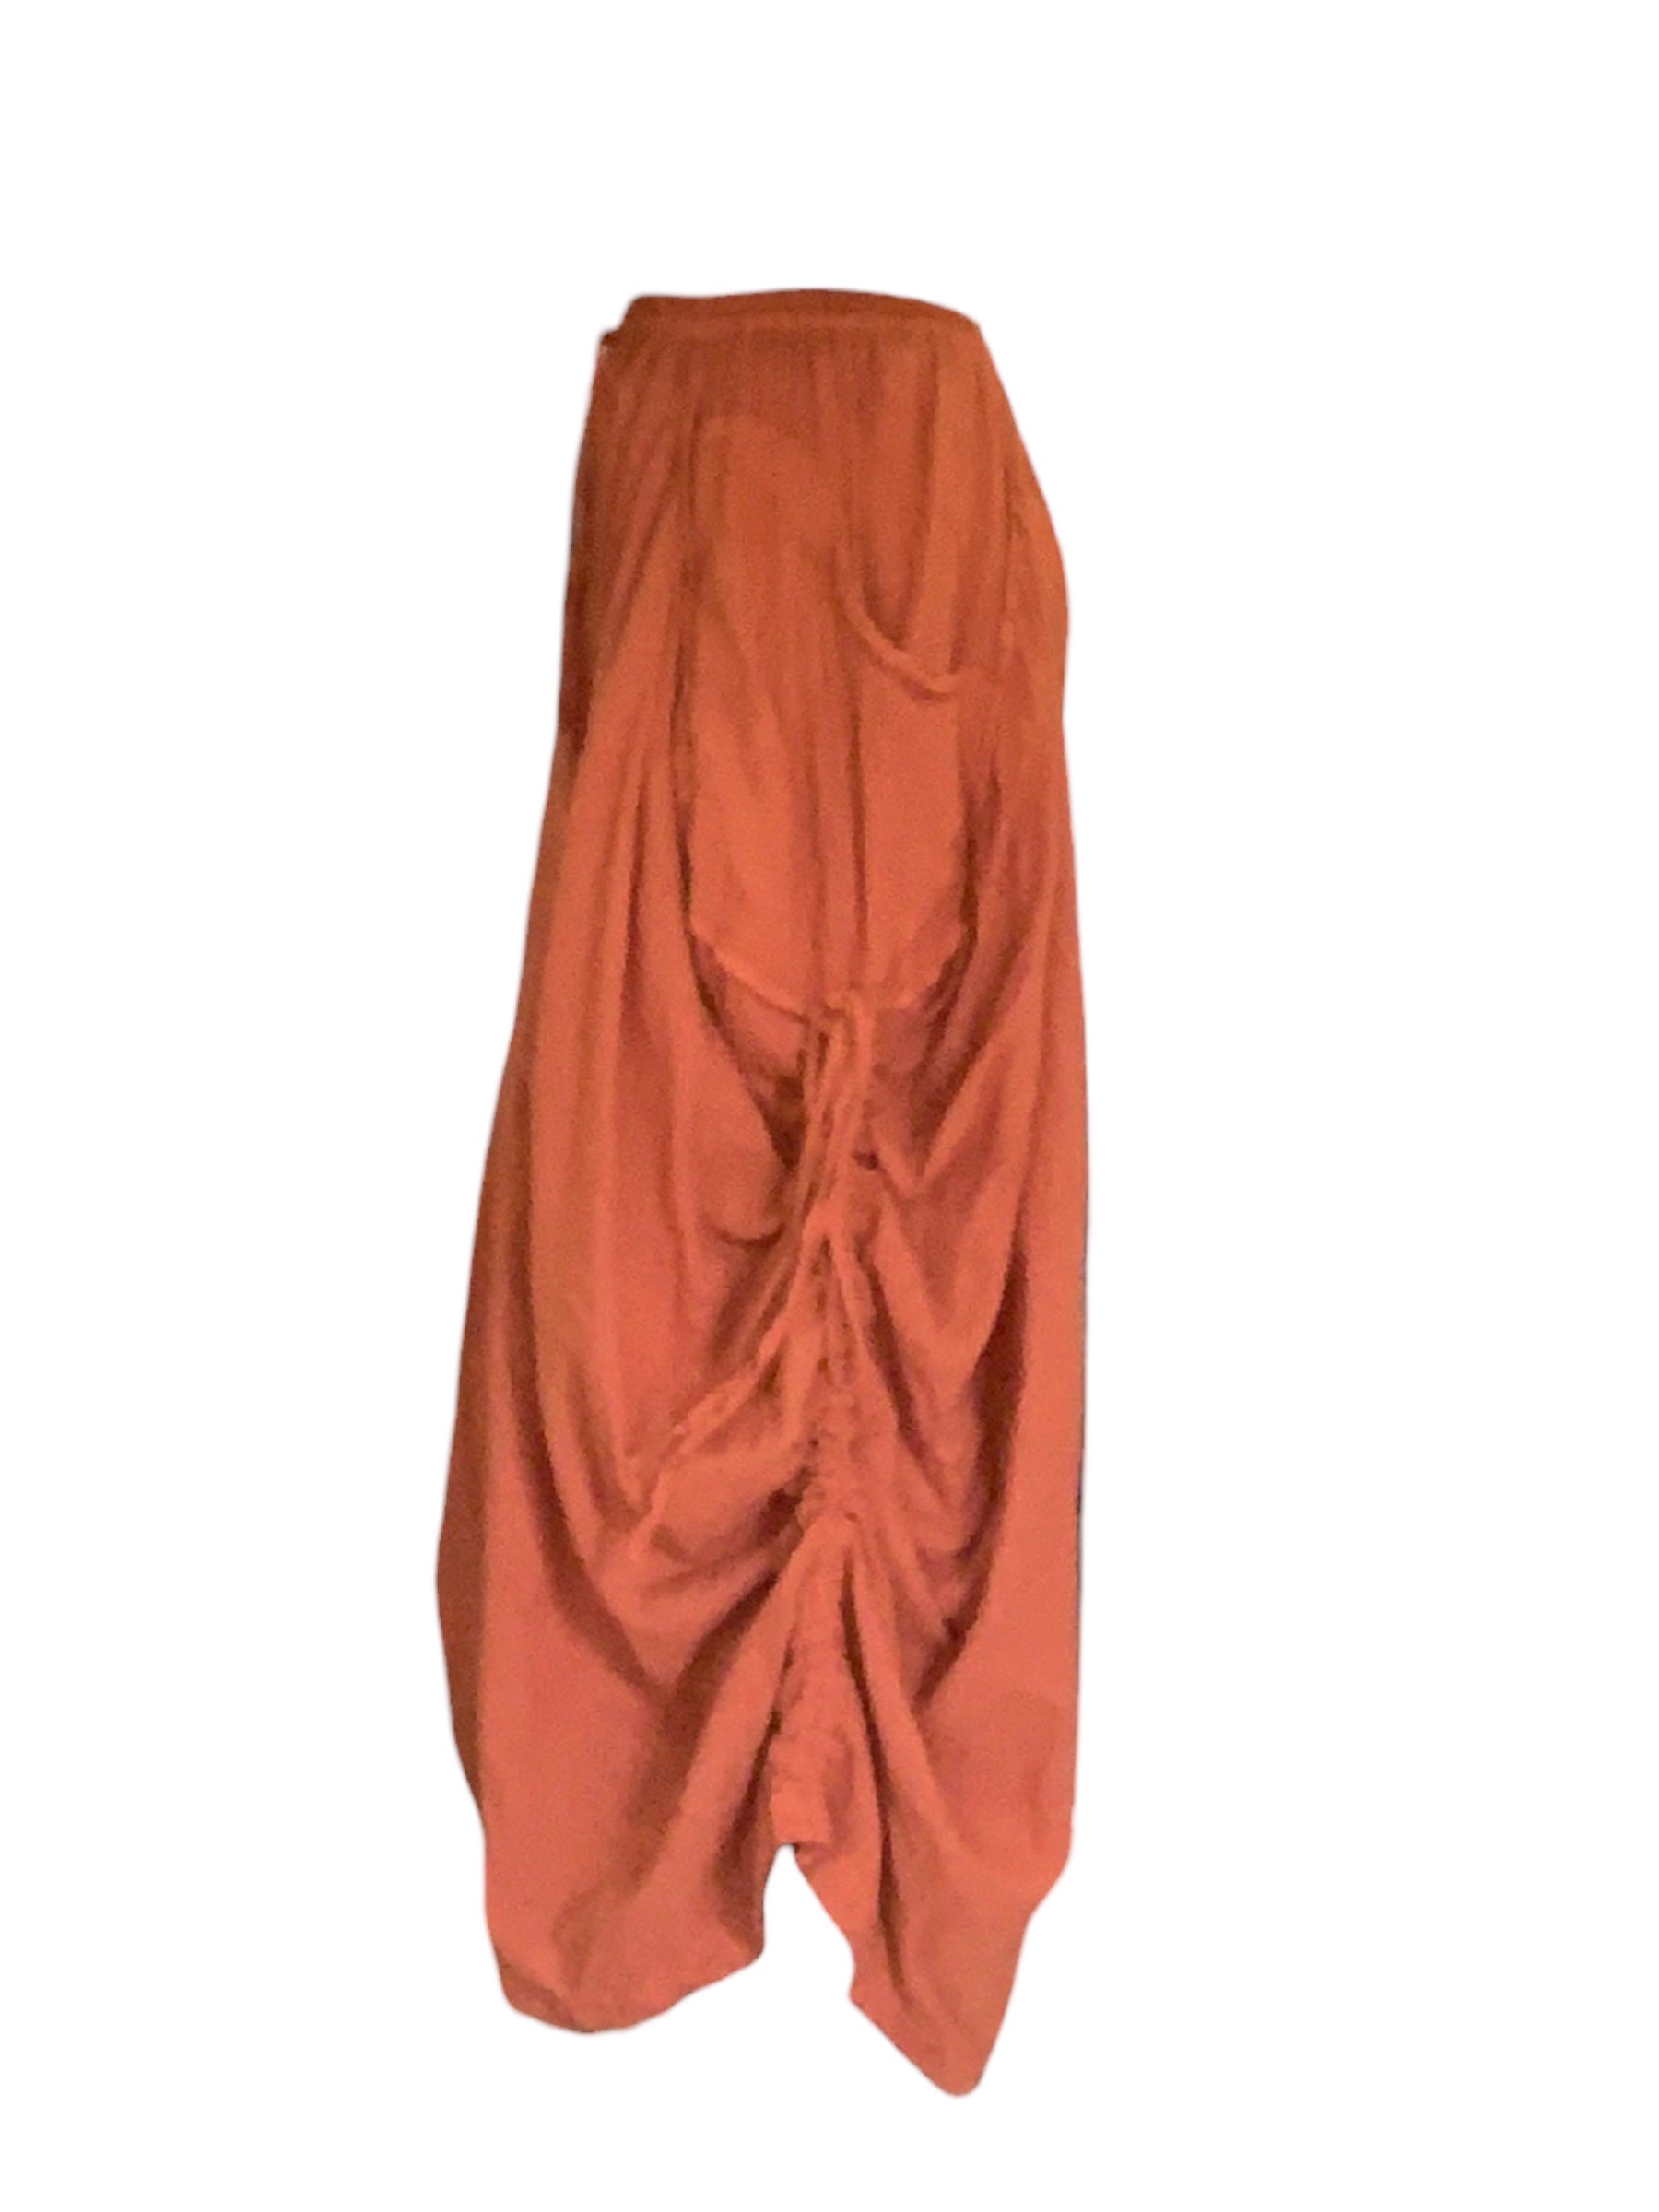 Burnt Orange Cotton Voile Tashi Versatile Pants/Skirt